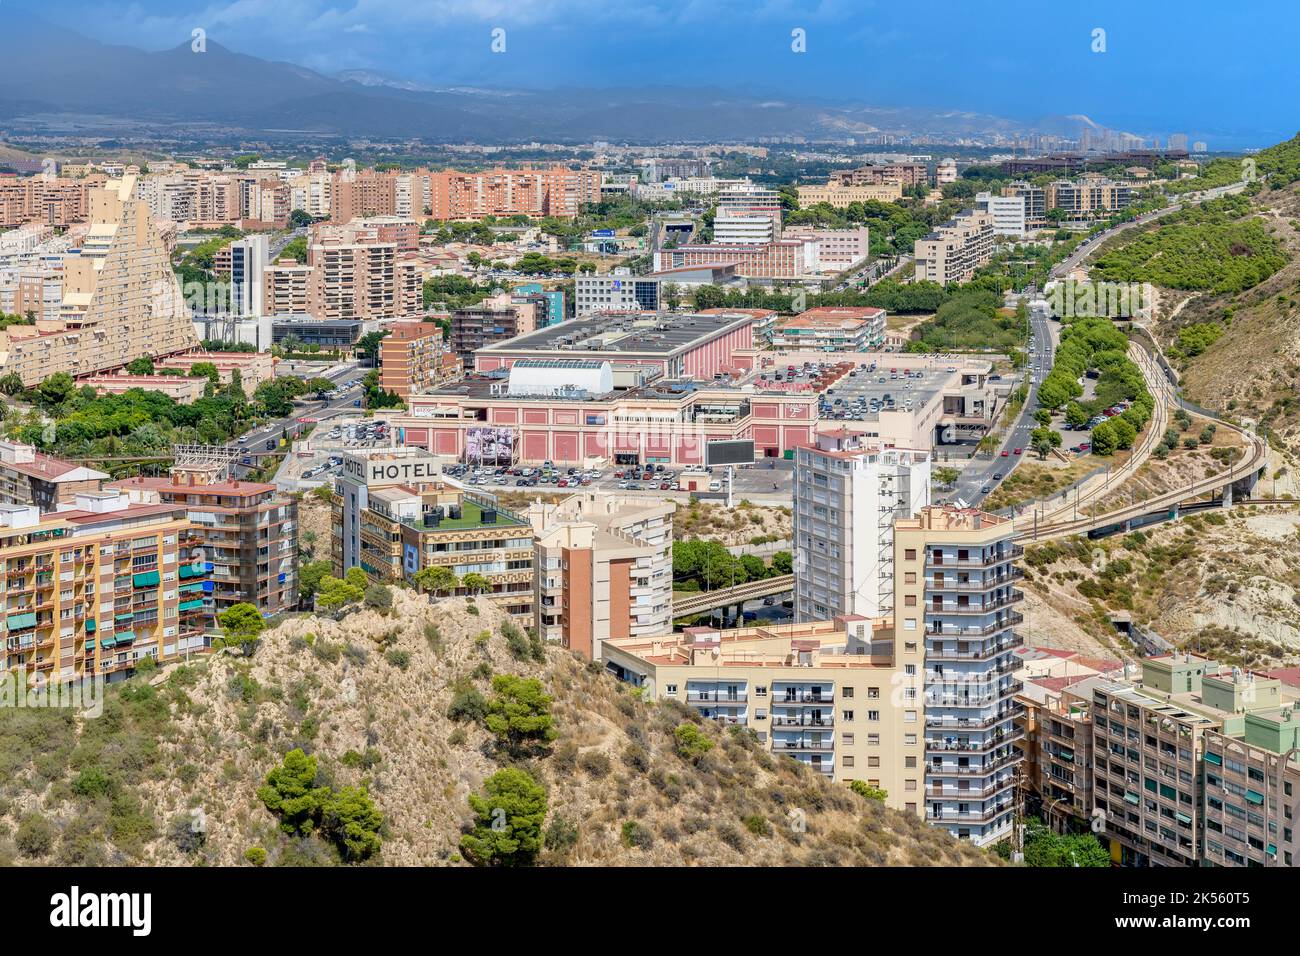 A bird's eye view over the port city of Alicante on the Costa Blanca in southern Spain. Shots taken from the Castillo de Santa Barbara. Stock Photo